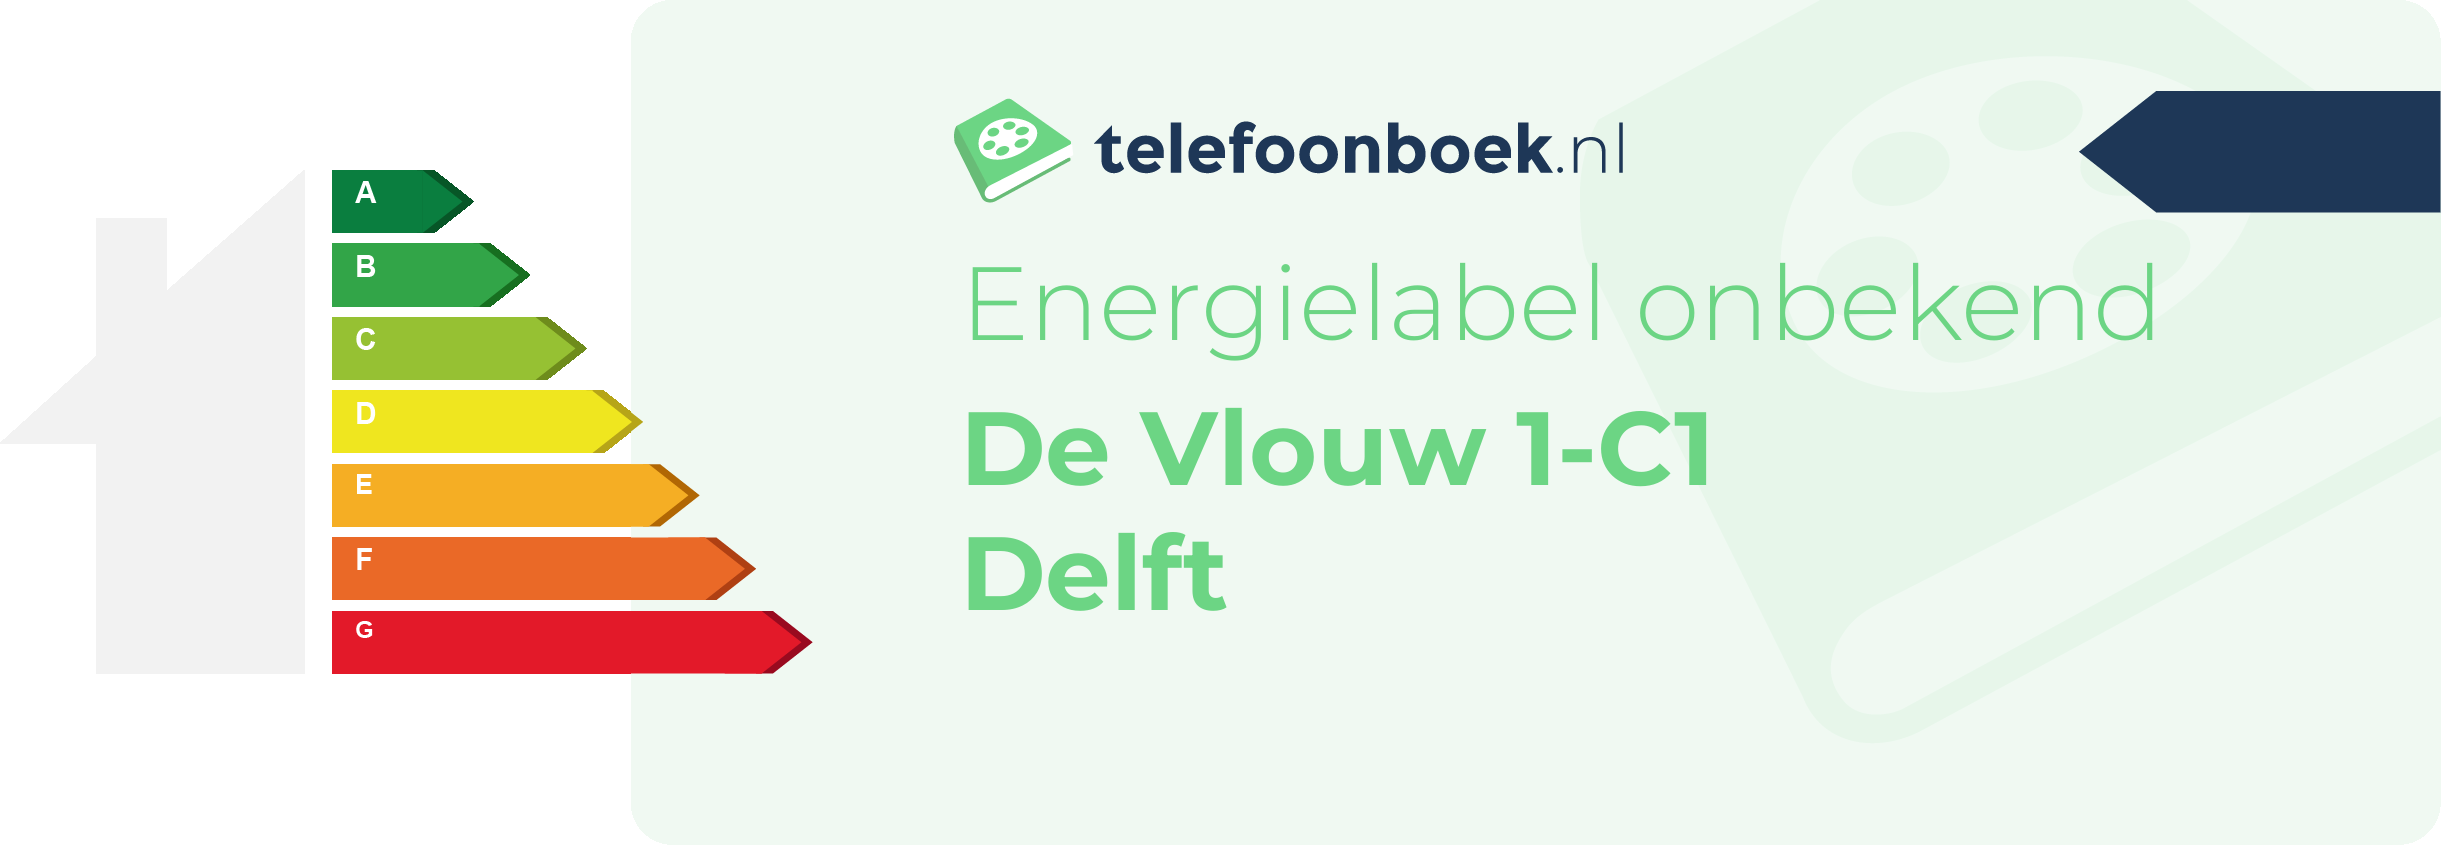 Energielabel De Vlouw 1-C1 Delft